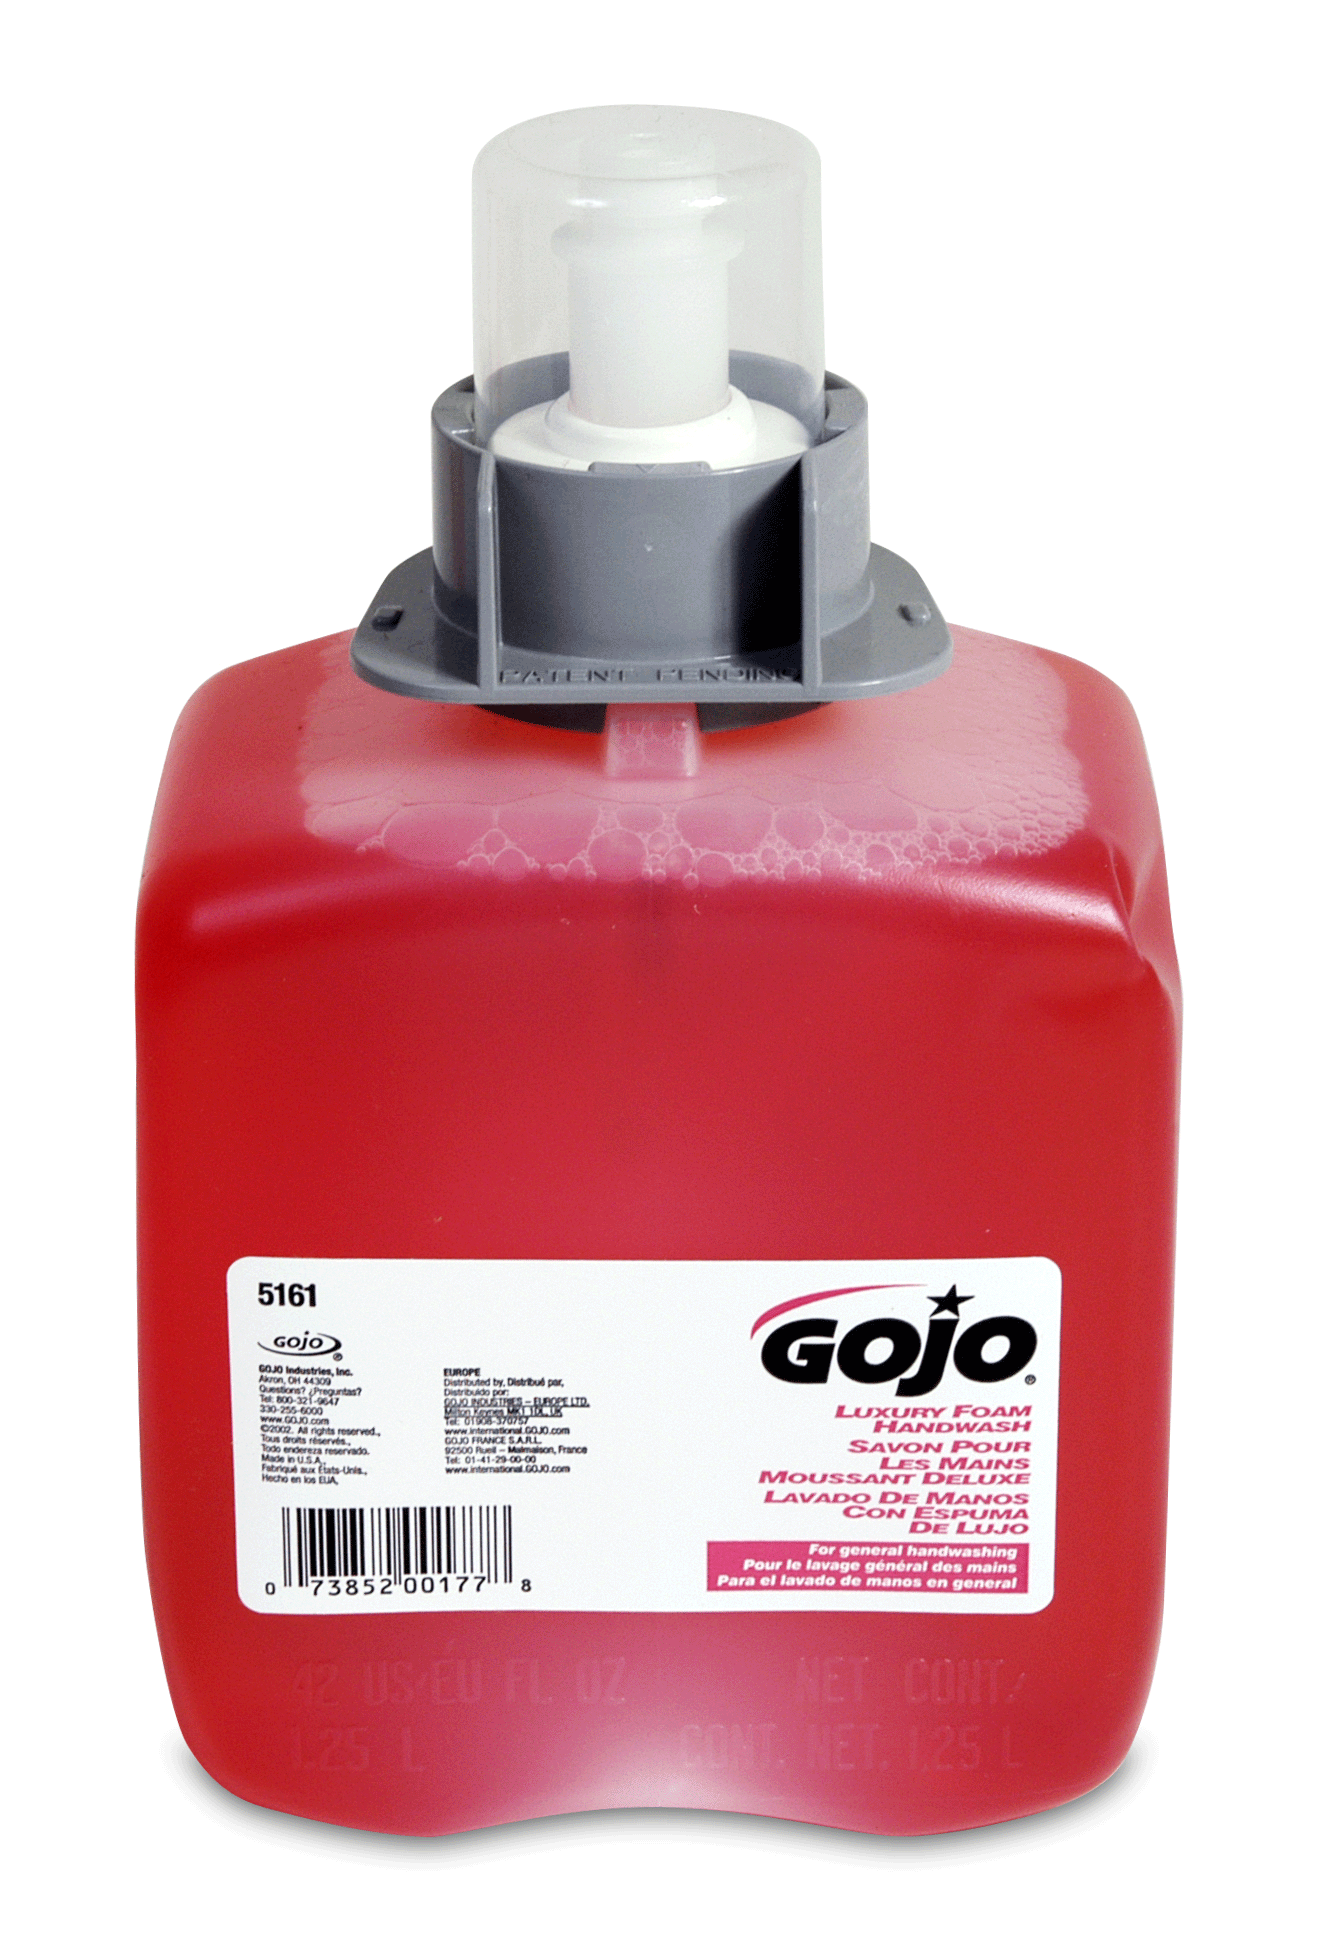 HAND SOAP FMX GOJO FOAMING
LUXURY HANDWASH 1250 ML 4 PER
CASE